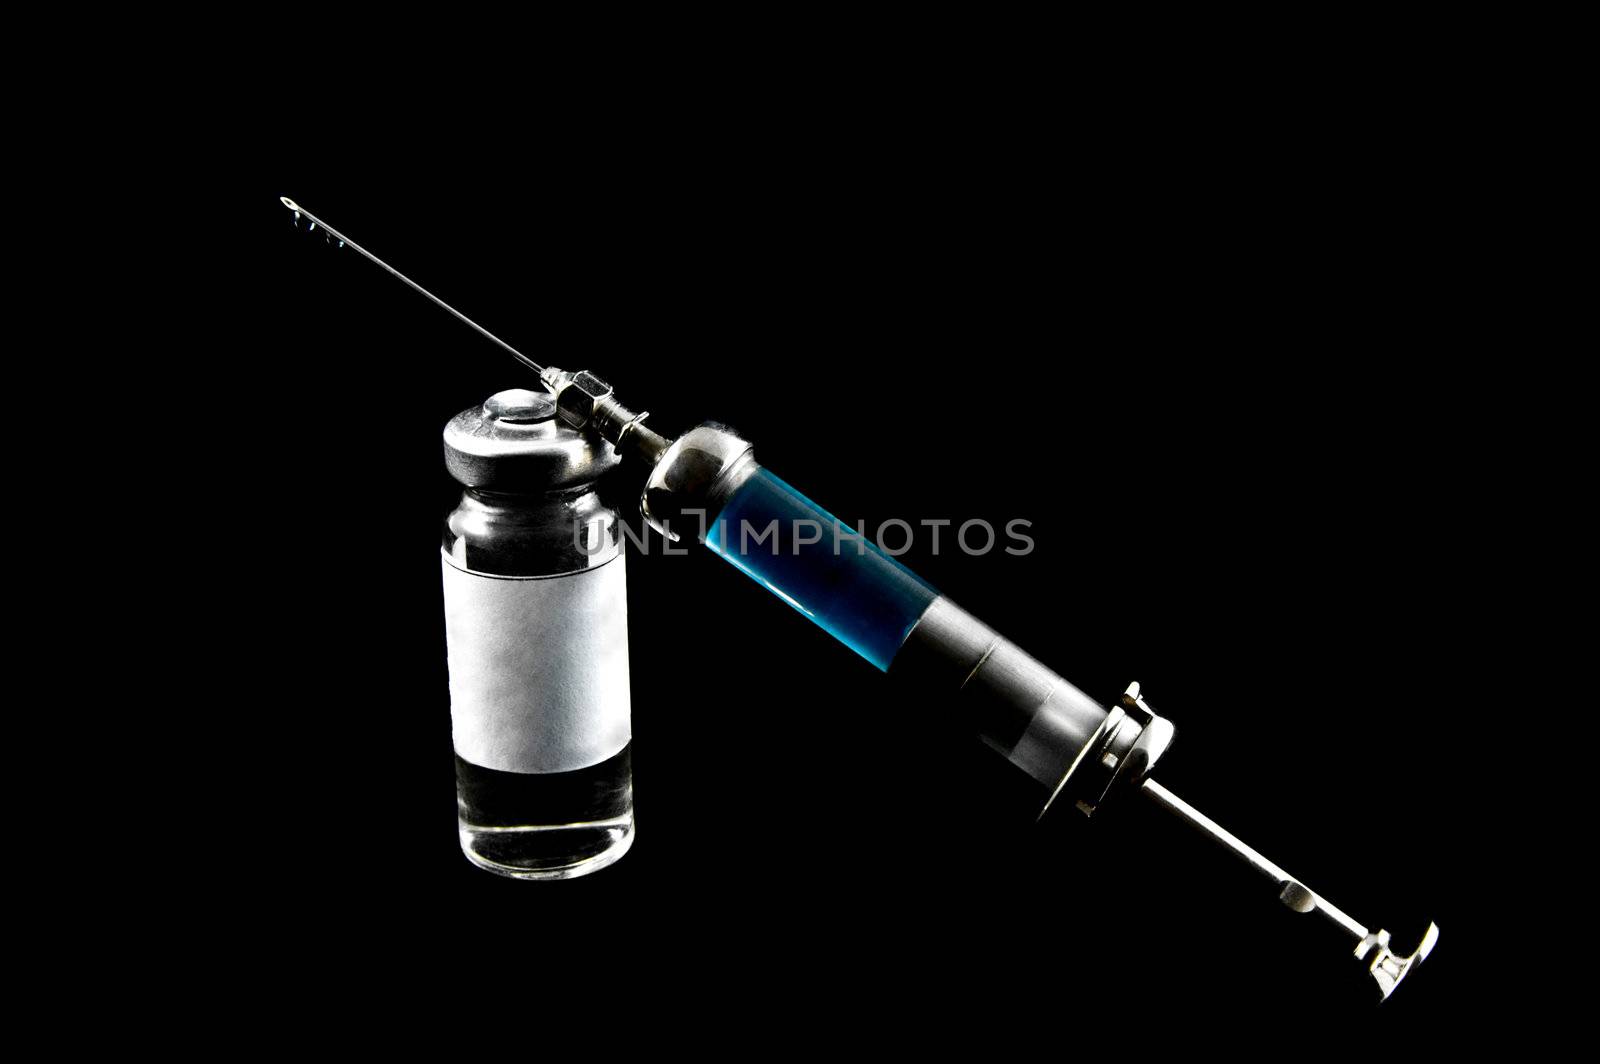 Reusable syringe and blue medicaments on a black background